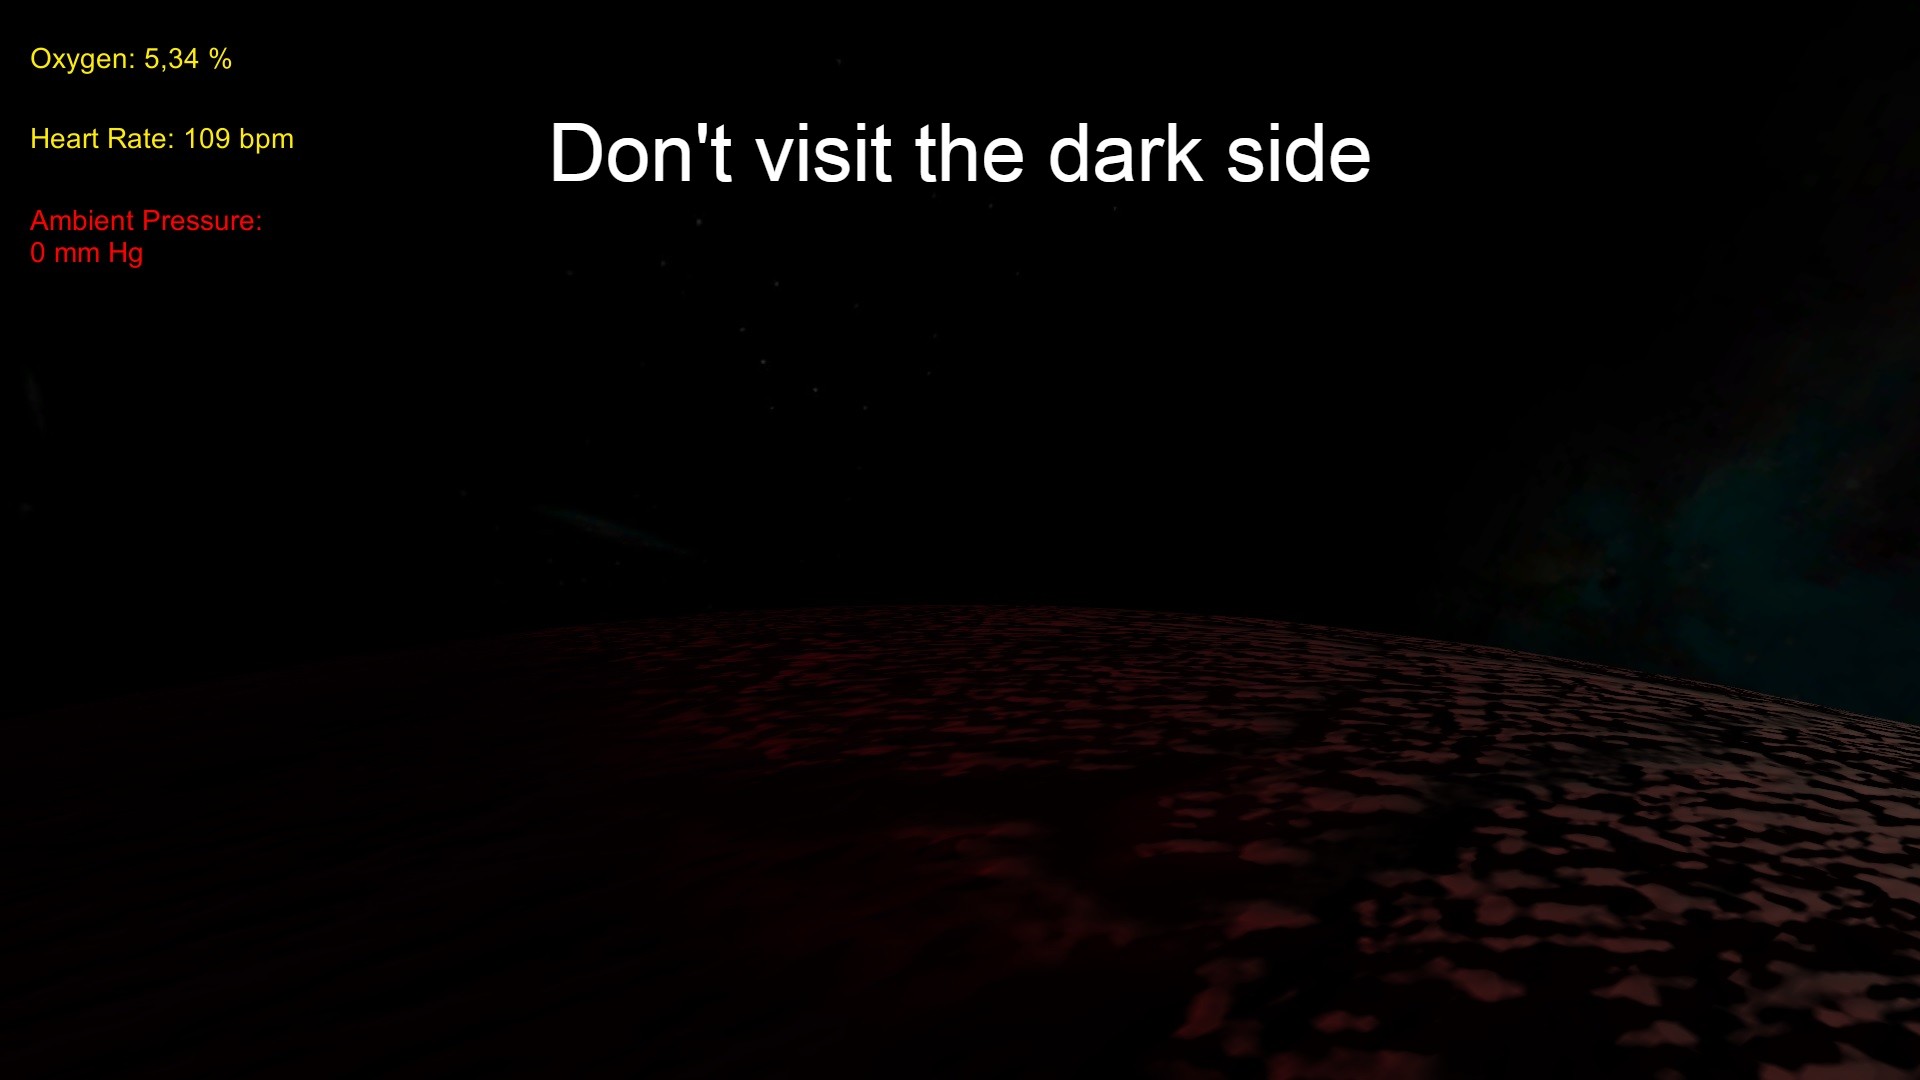 Don't visit the dark side